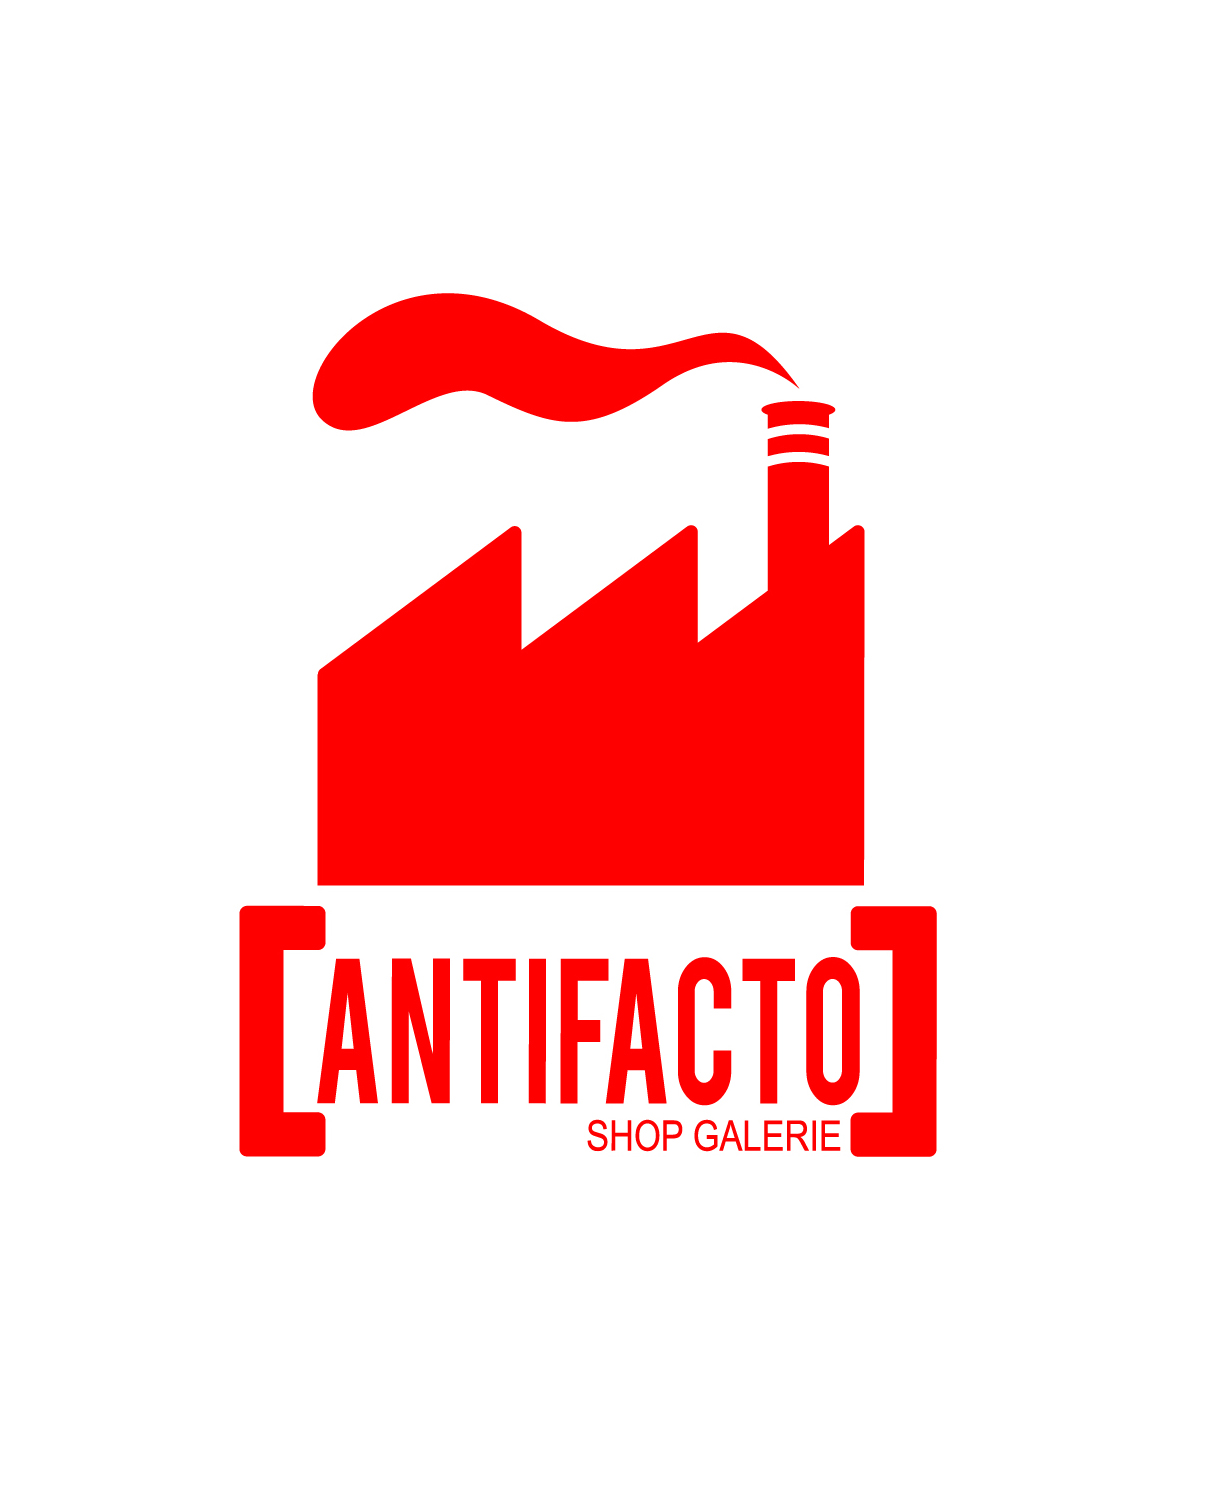 Antifacto